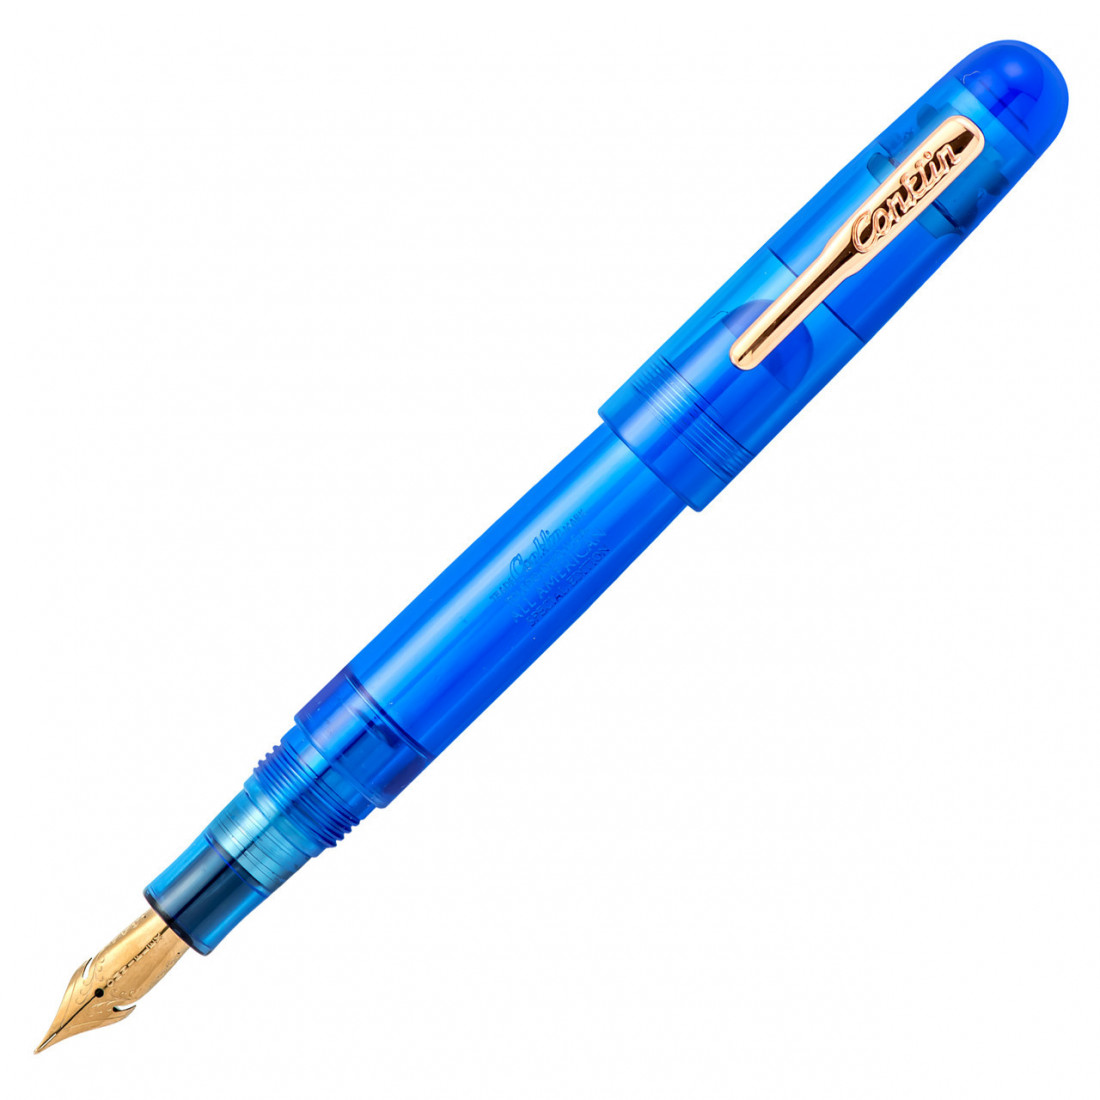 Conklin All American Demo Blue(eyedropper) Special Edition Fountain Pen(cartridge/converter/eyedropper filling system)